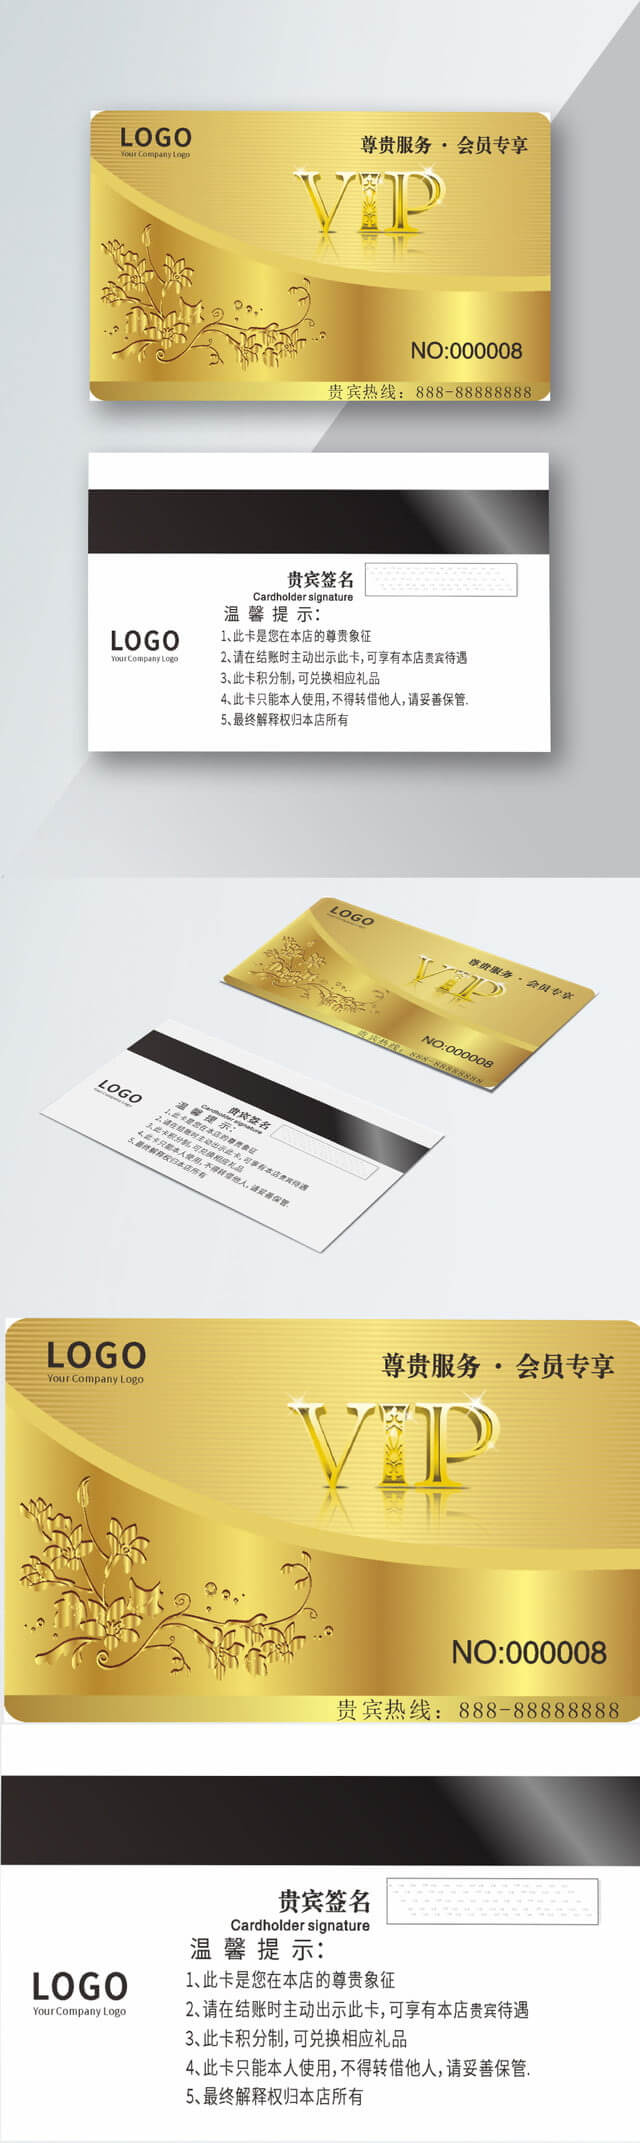 Gold Membership Card Free Download Vip Card Metal Card Intended For Membership Card Template Free